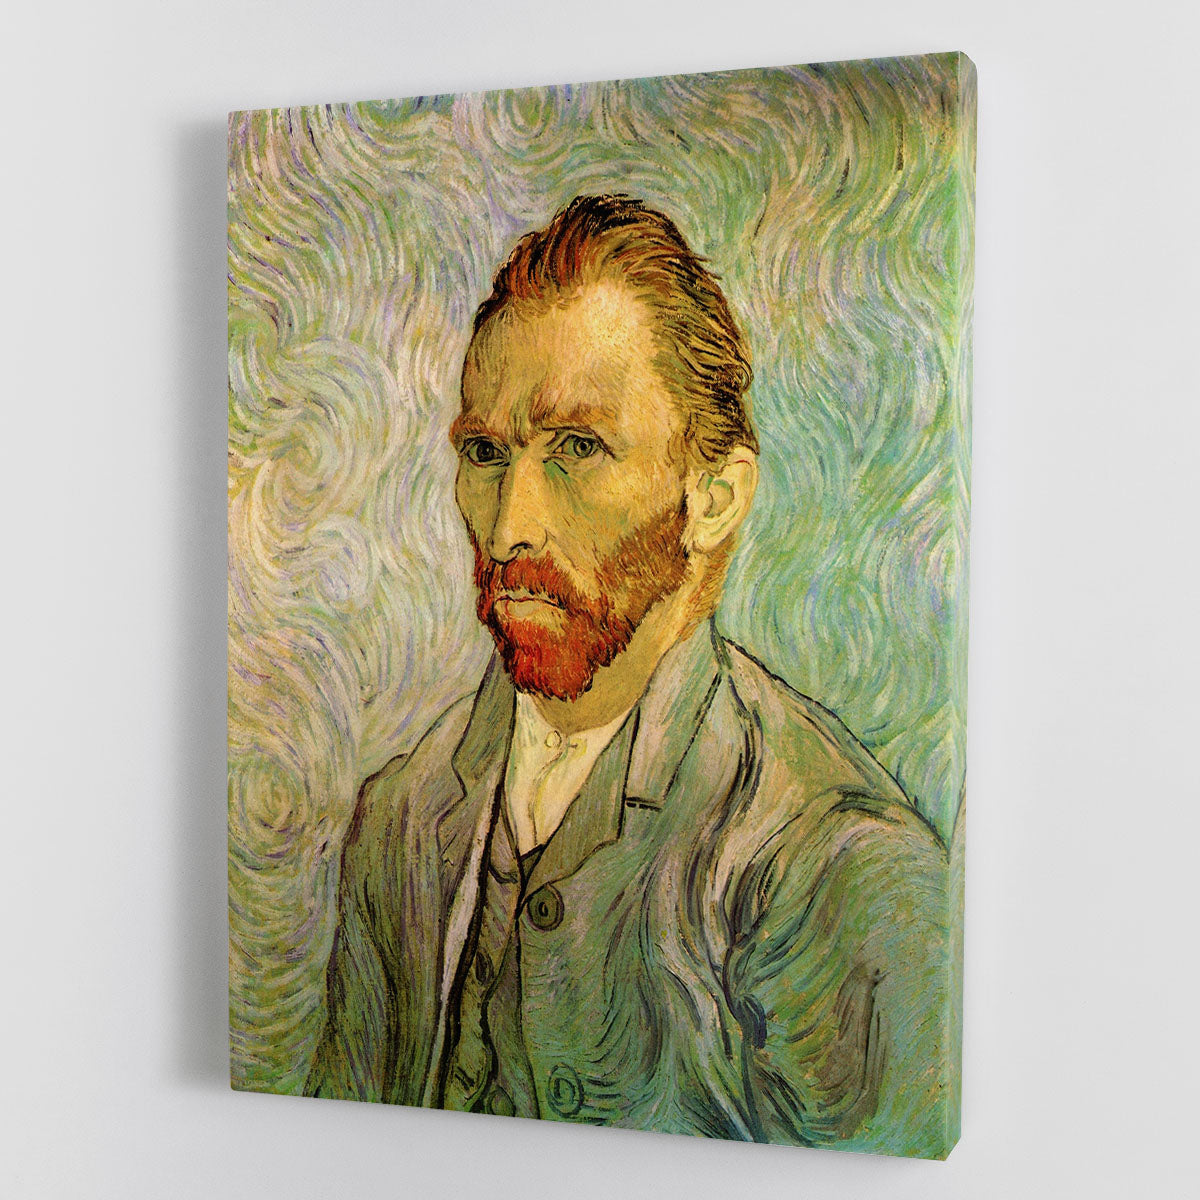 Self-Portrait 2 by Van Gogh Canvas Print or Poster - Canvas Art Rocks - 1